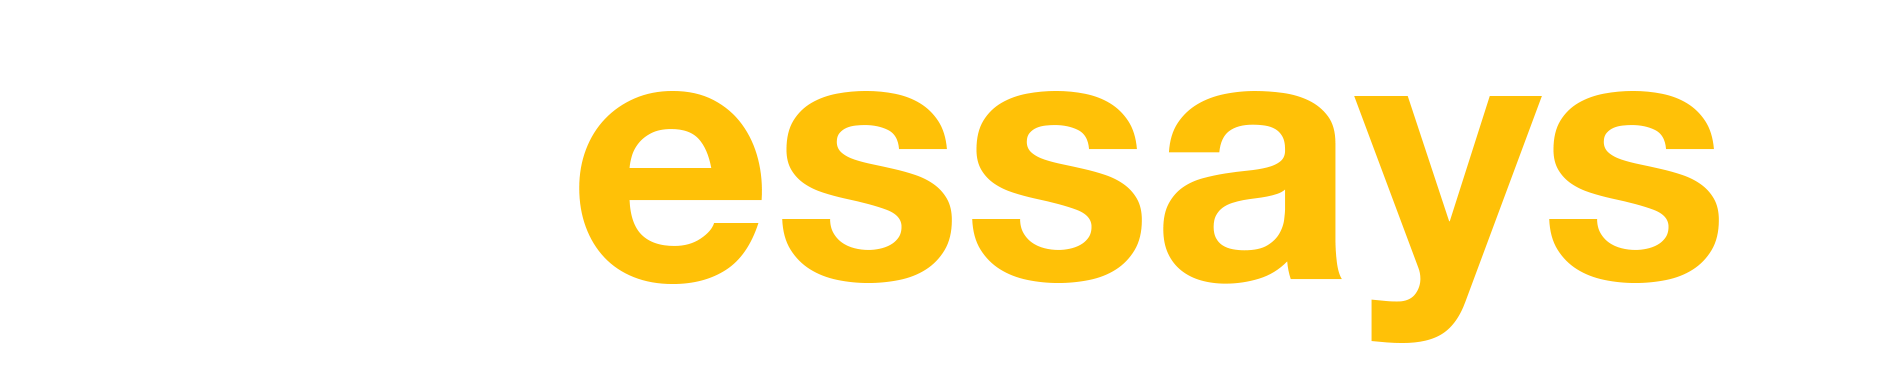 stressays logo